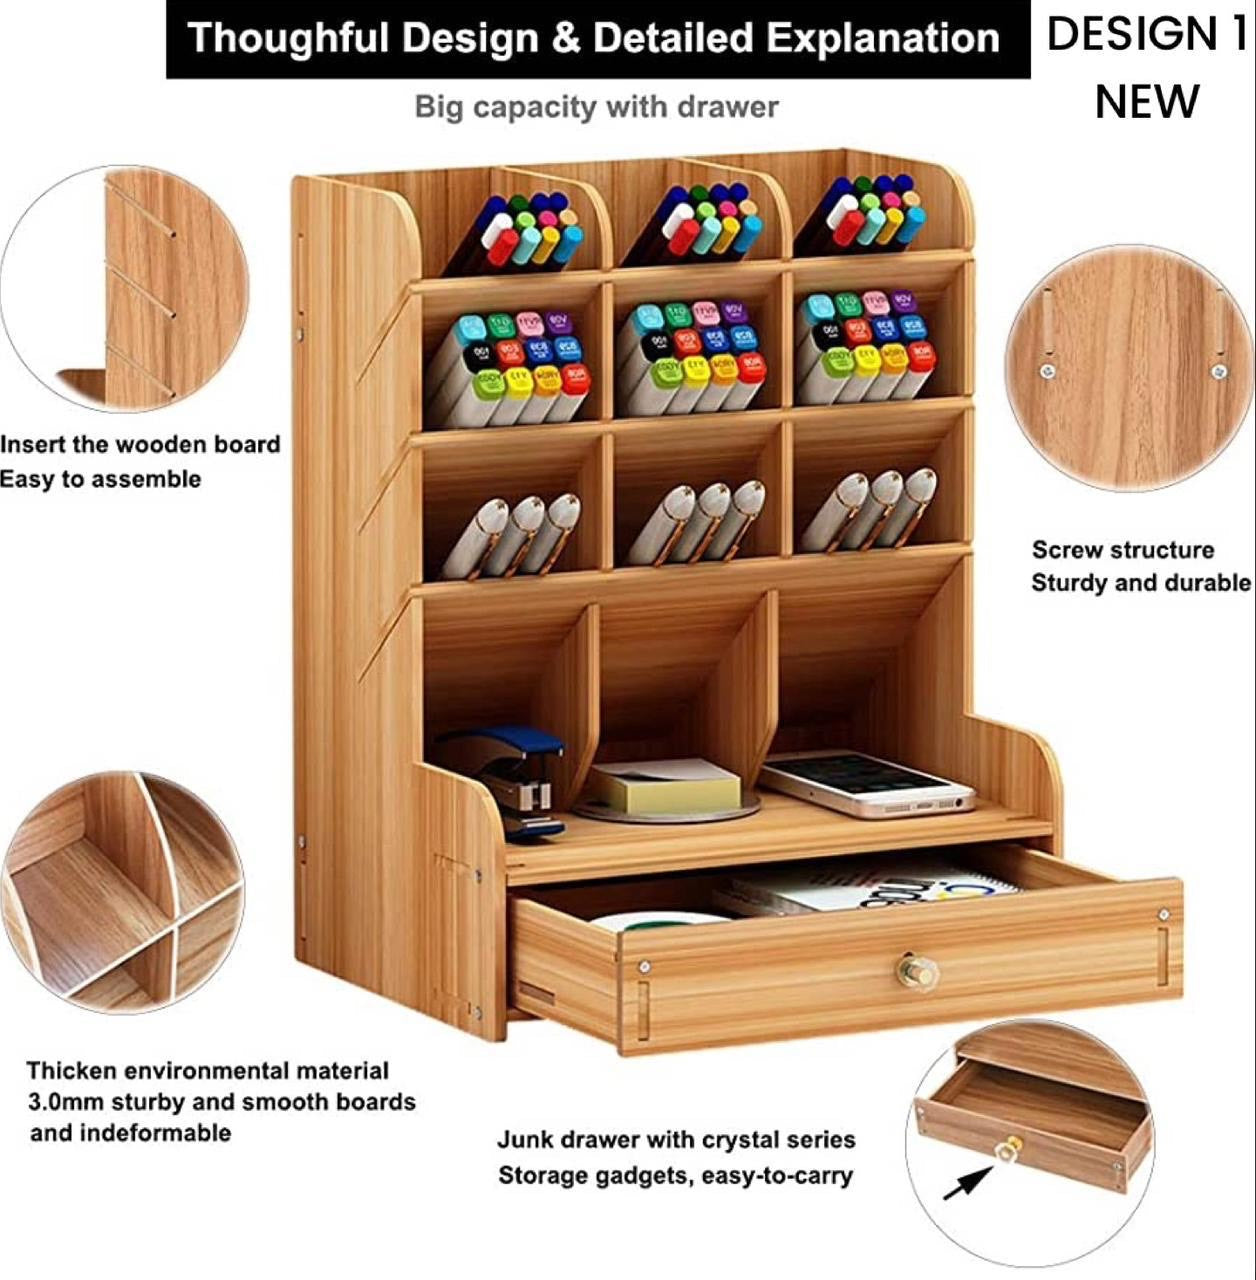 Multifunctional Wooden Desktop Storage Design #1 - Gear Up ZA